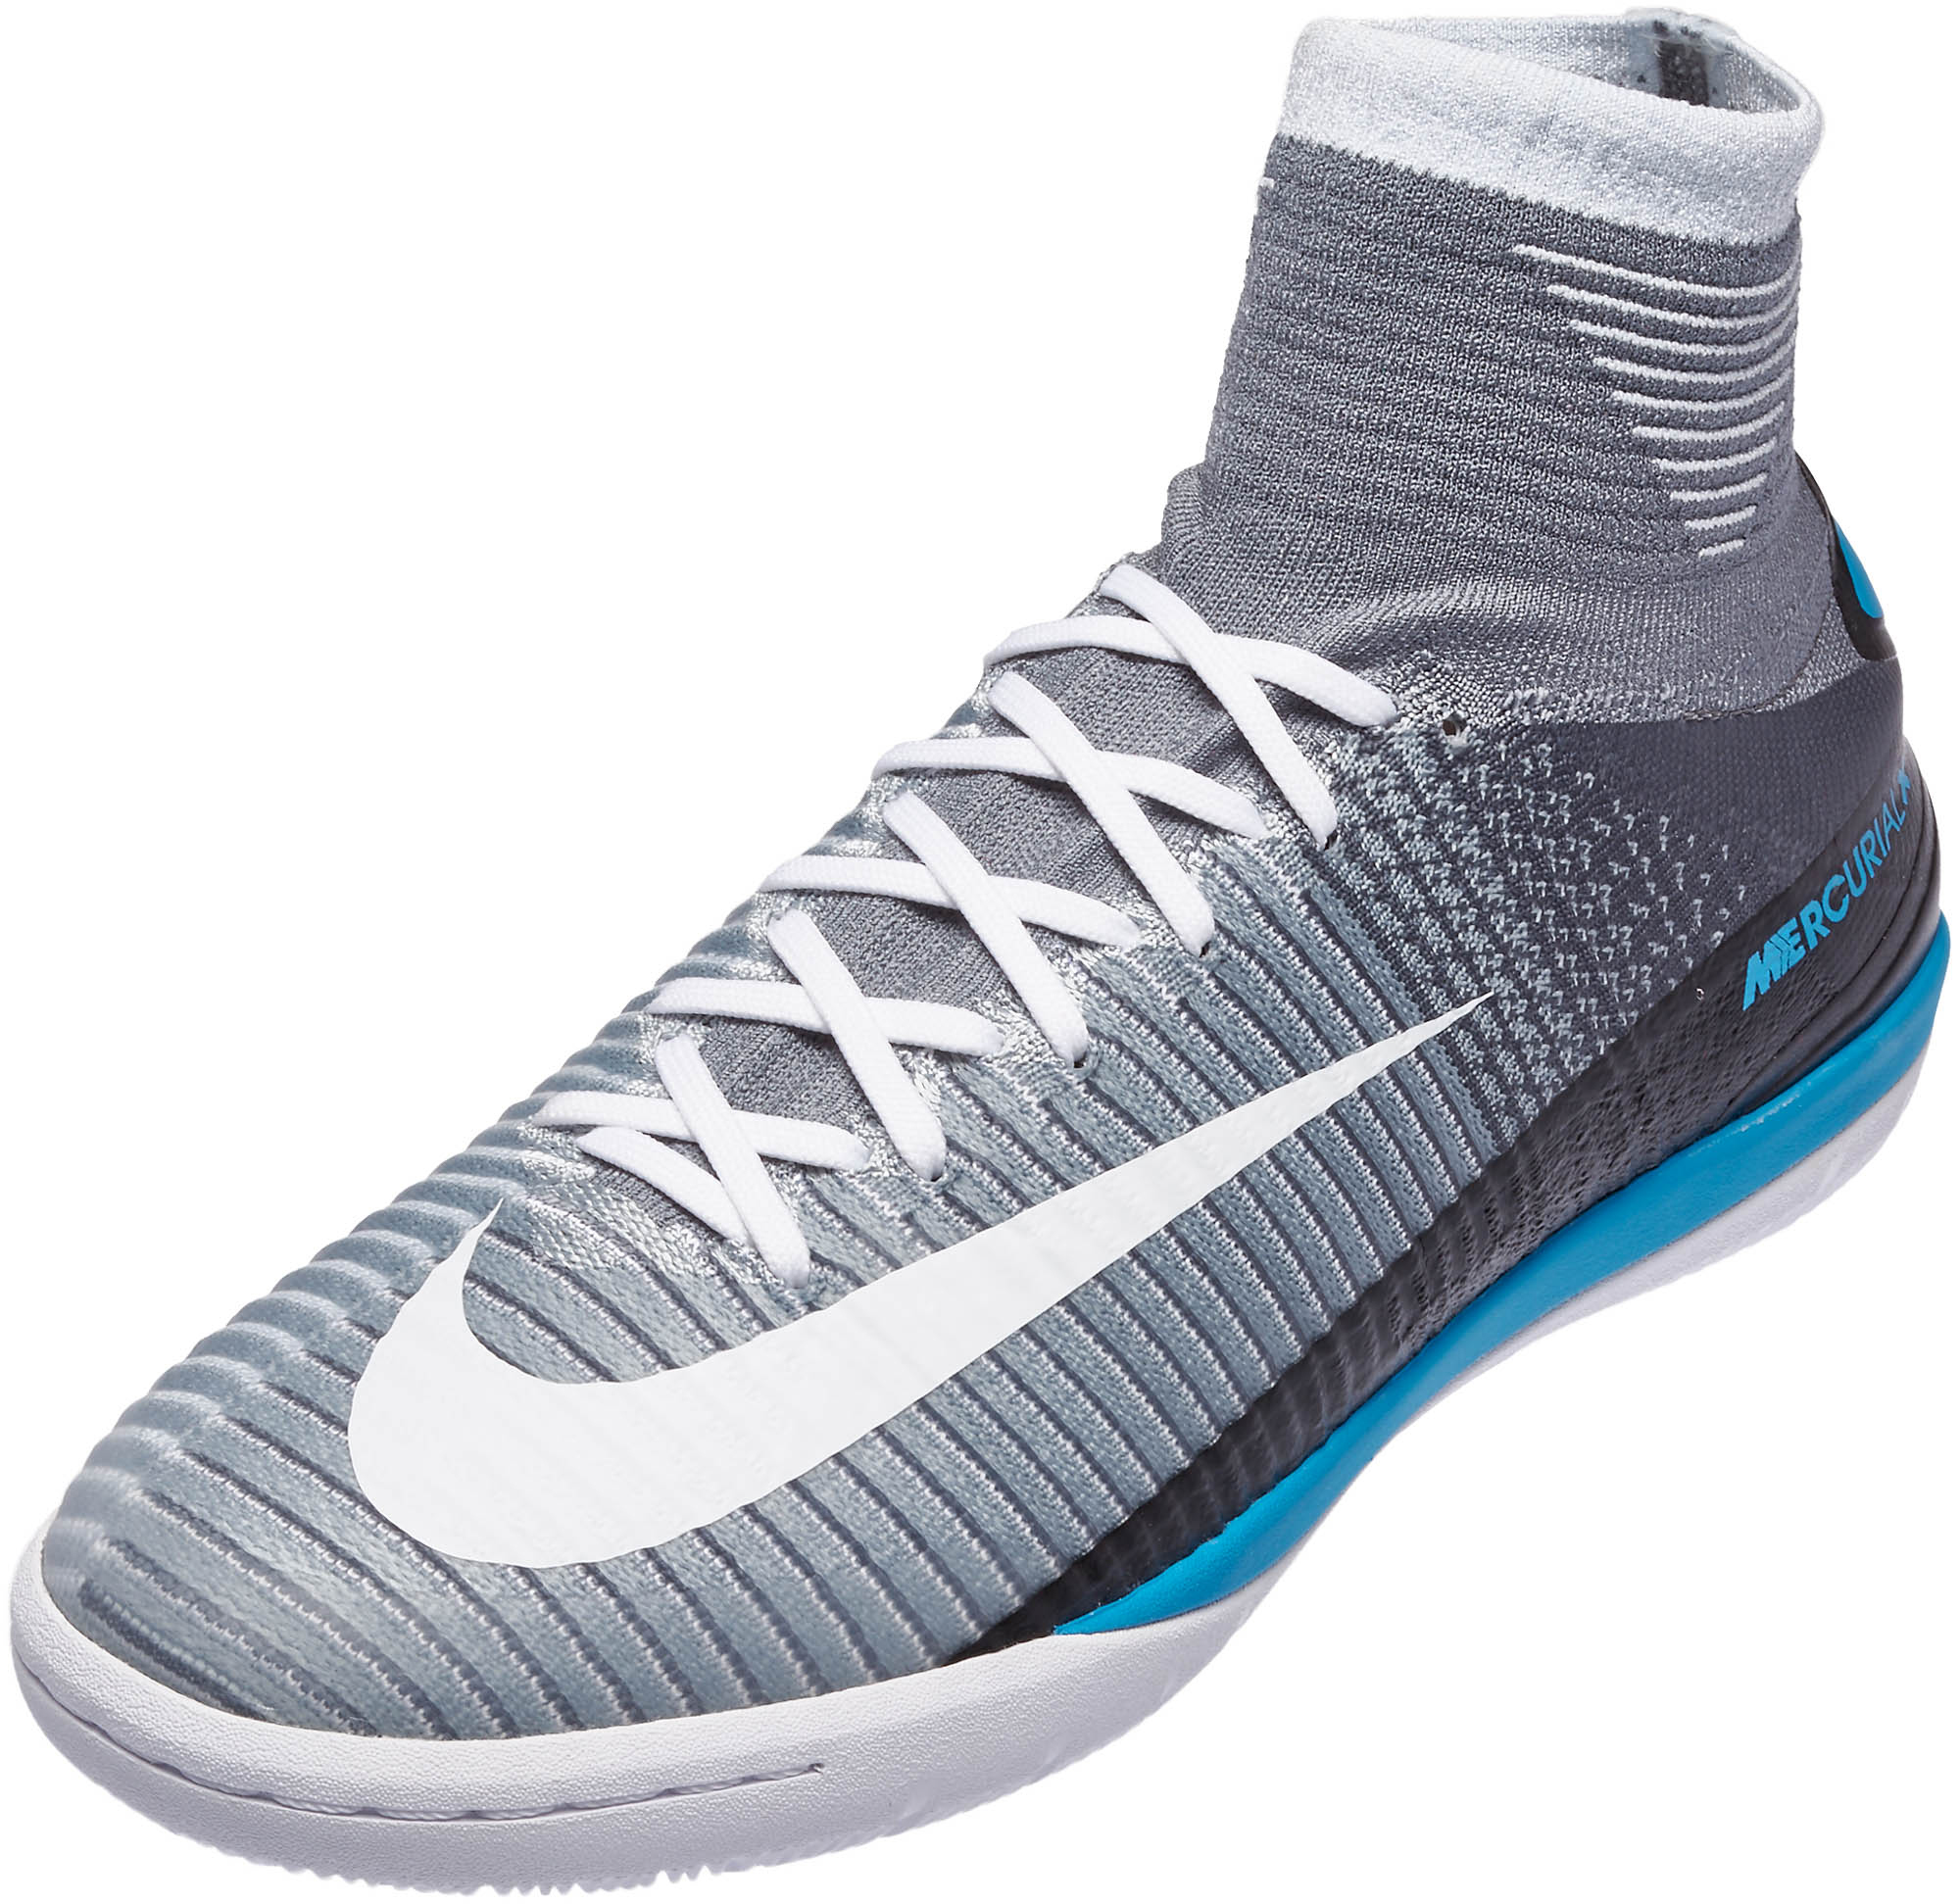 Nike MercurialX Proximo II - Grey Indoor Soccer Shoes